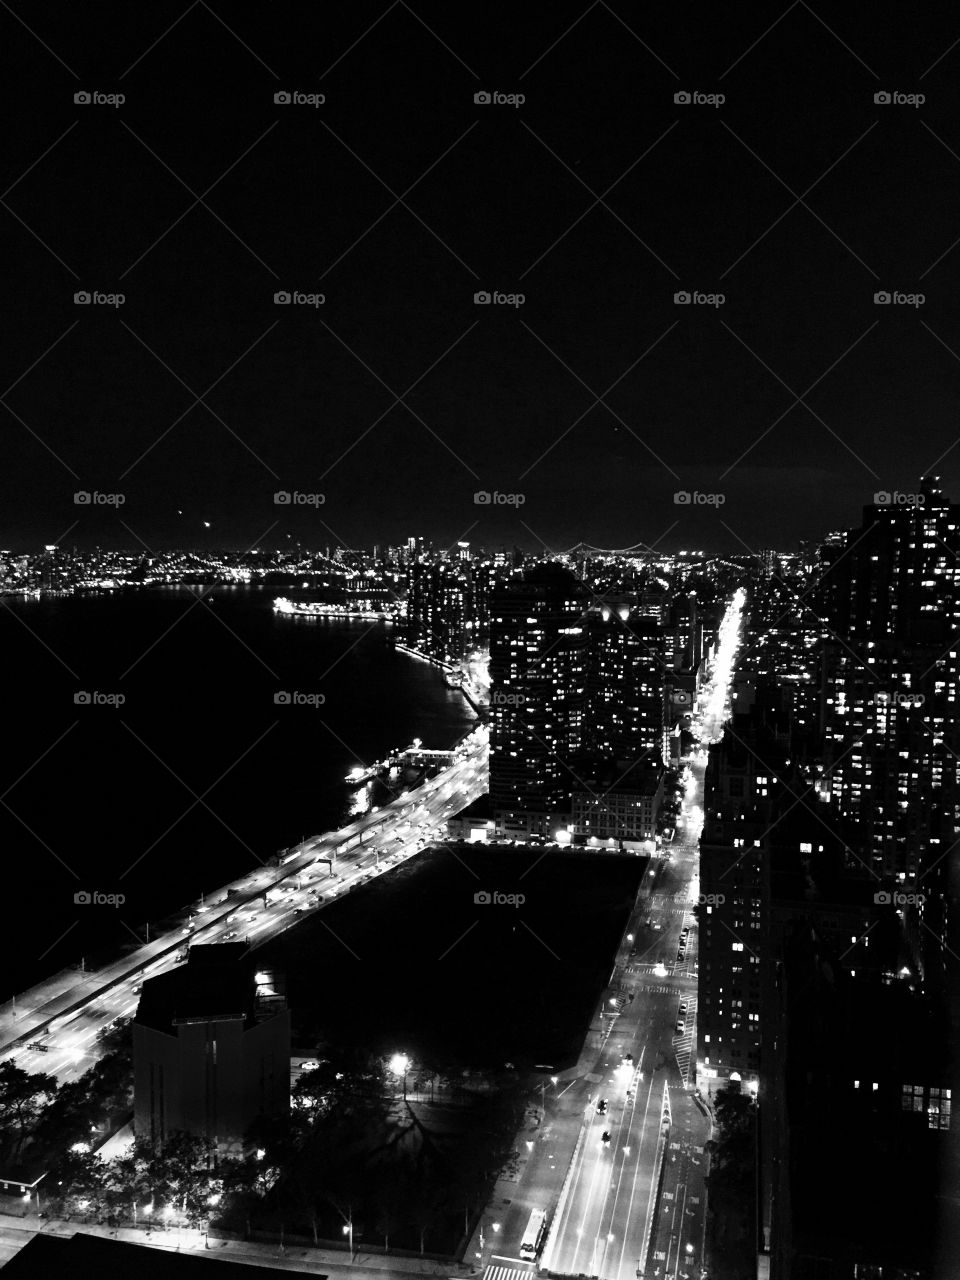 New York City Lights. City lights, 30 floors up